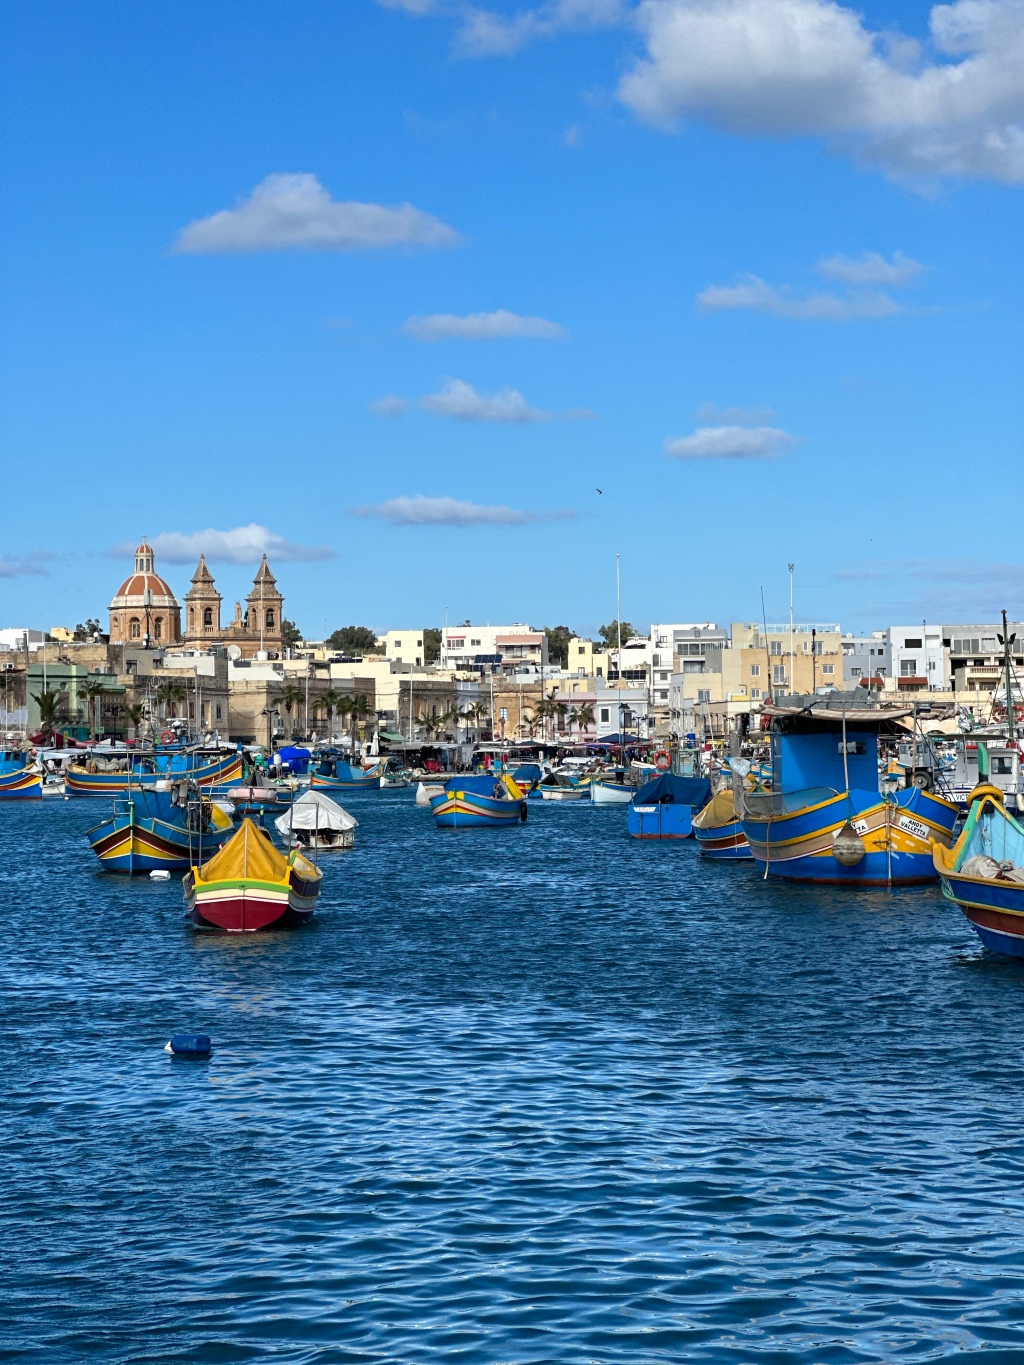 Plan putovanja nabrzaka za Maltu